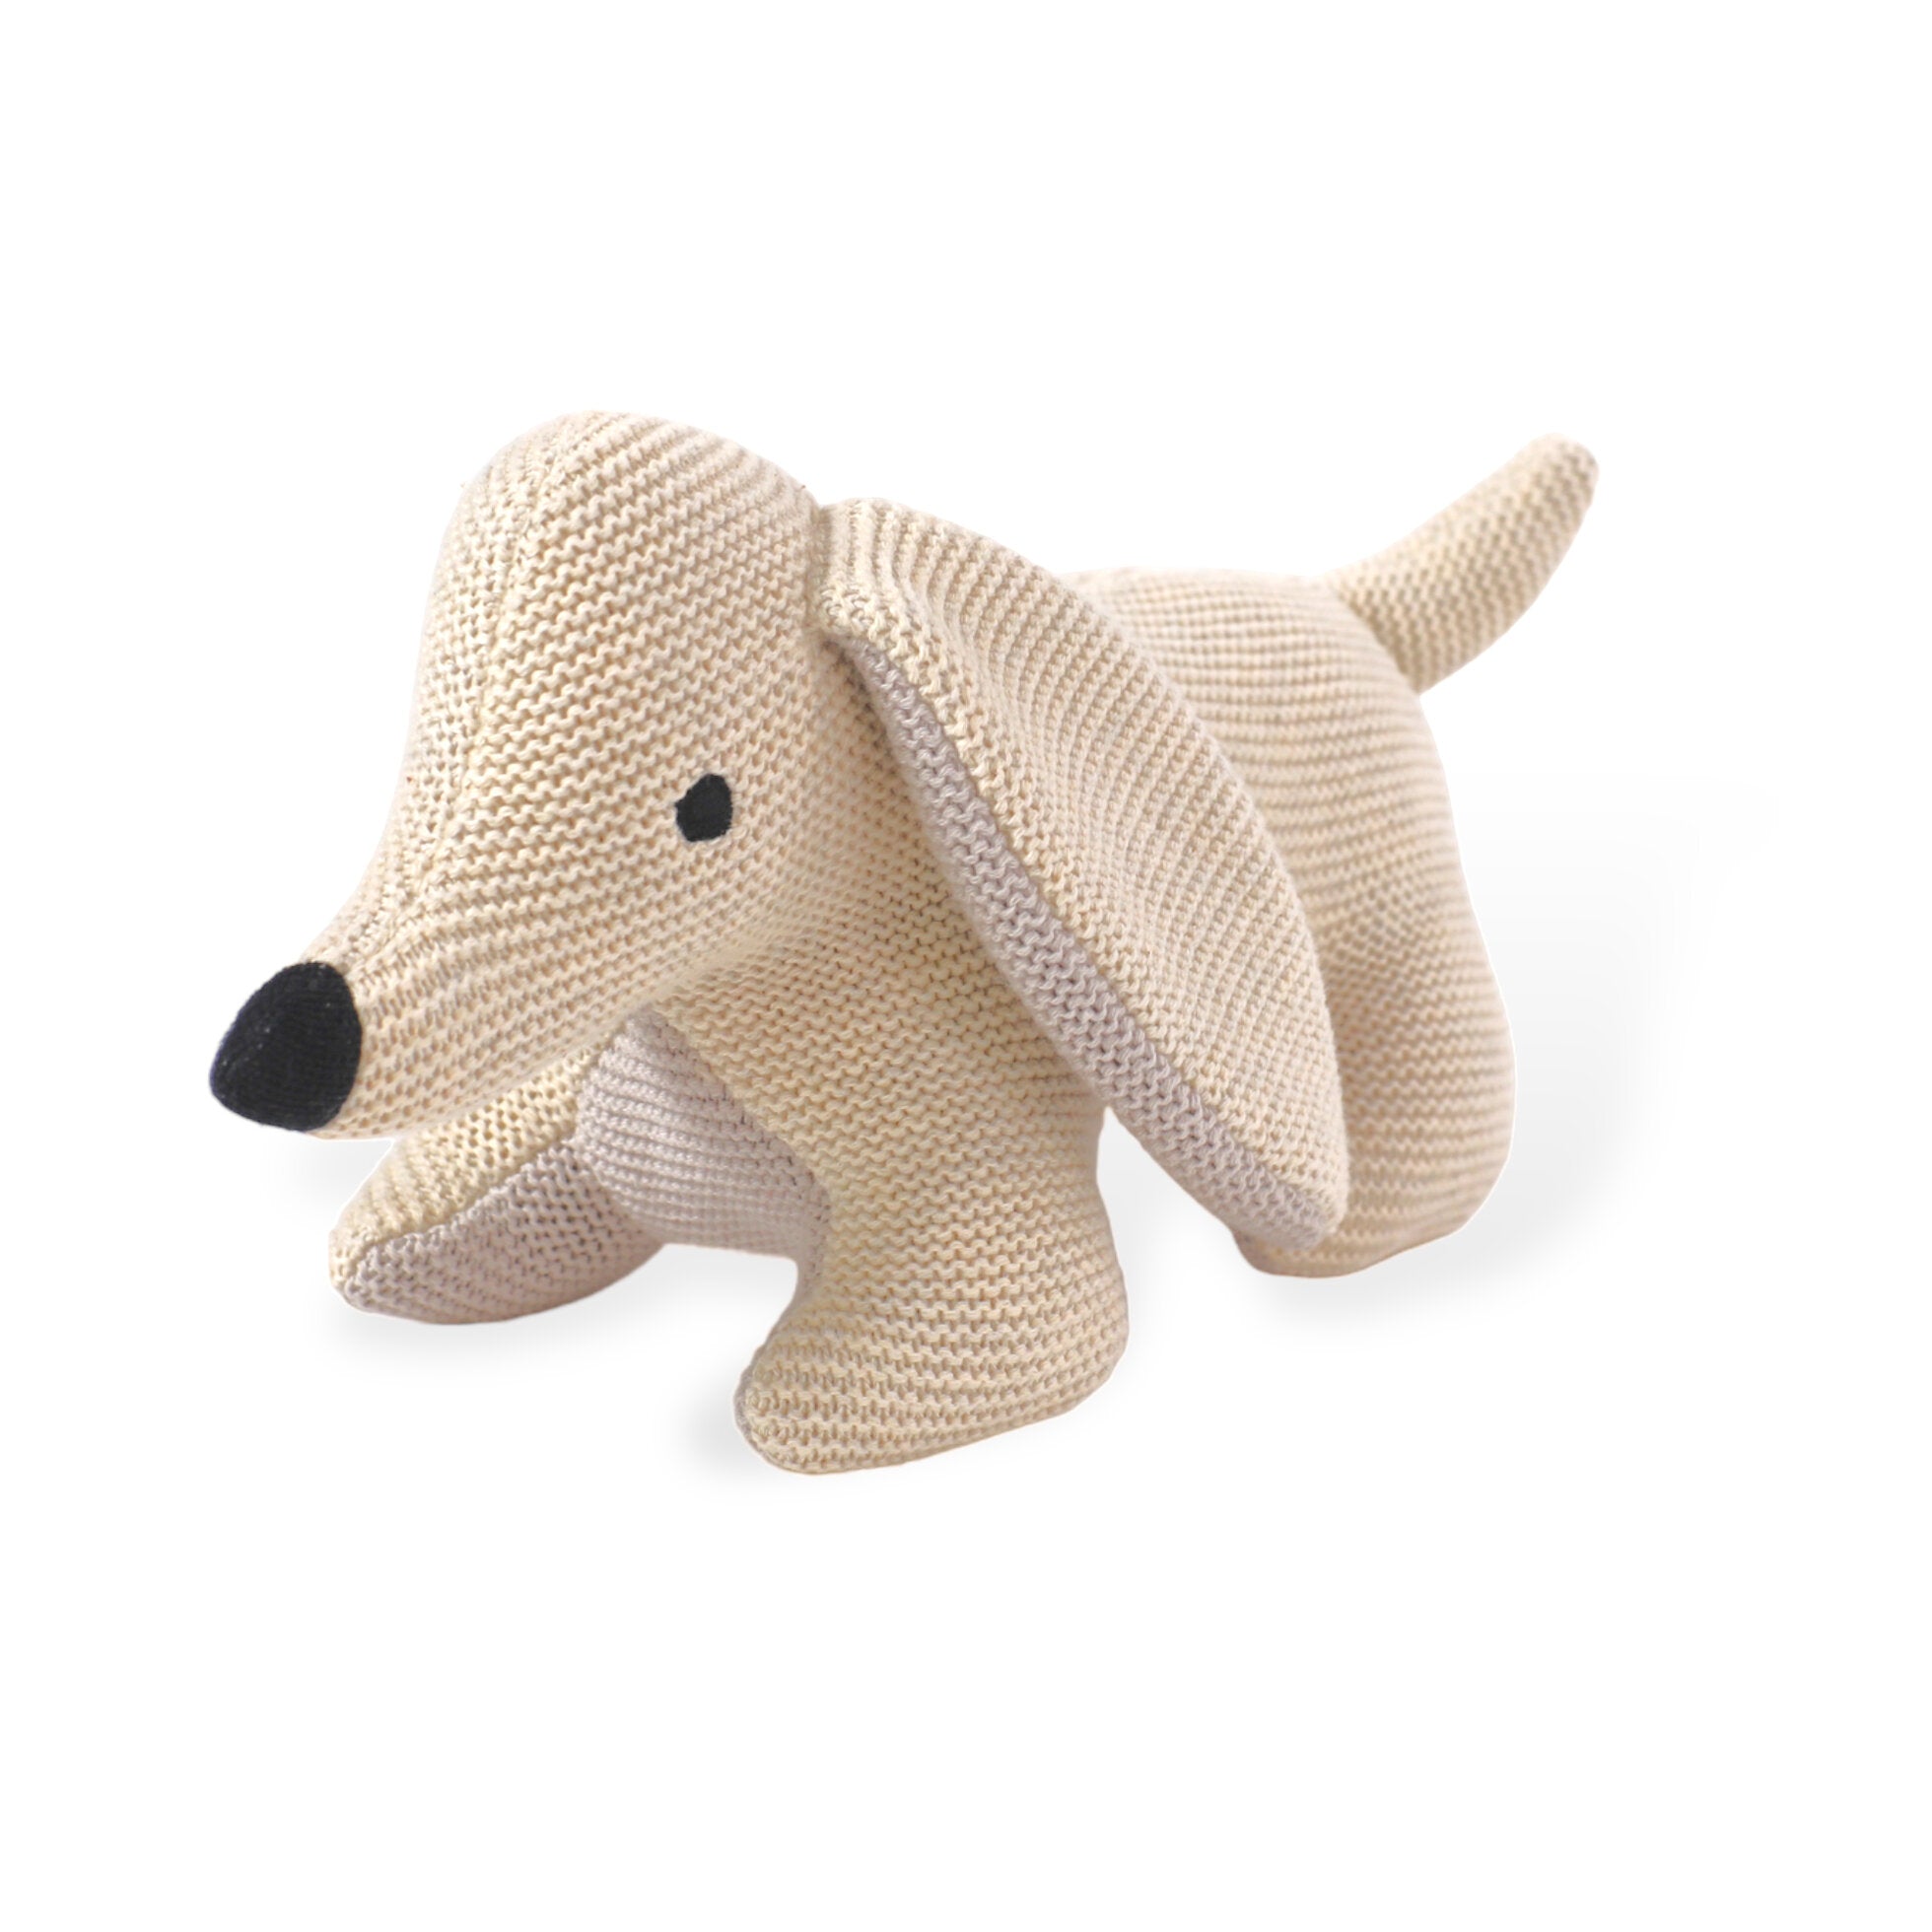 Dachshund Dog Knit Stuffed Animal Baby Toy (Organic Cotton) by Viverano Organics